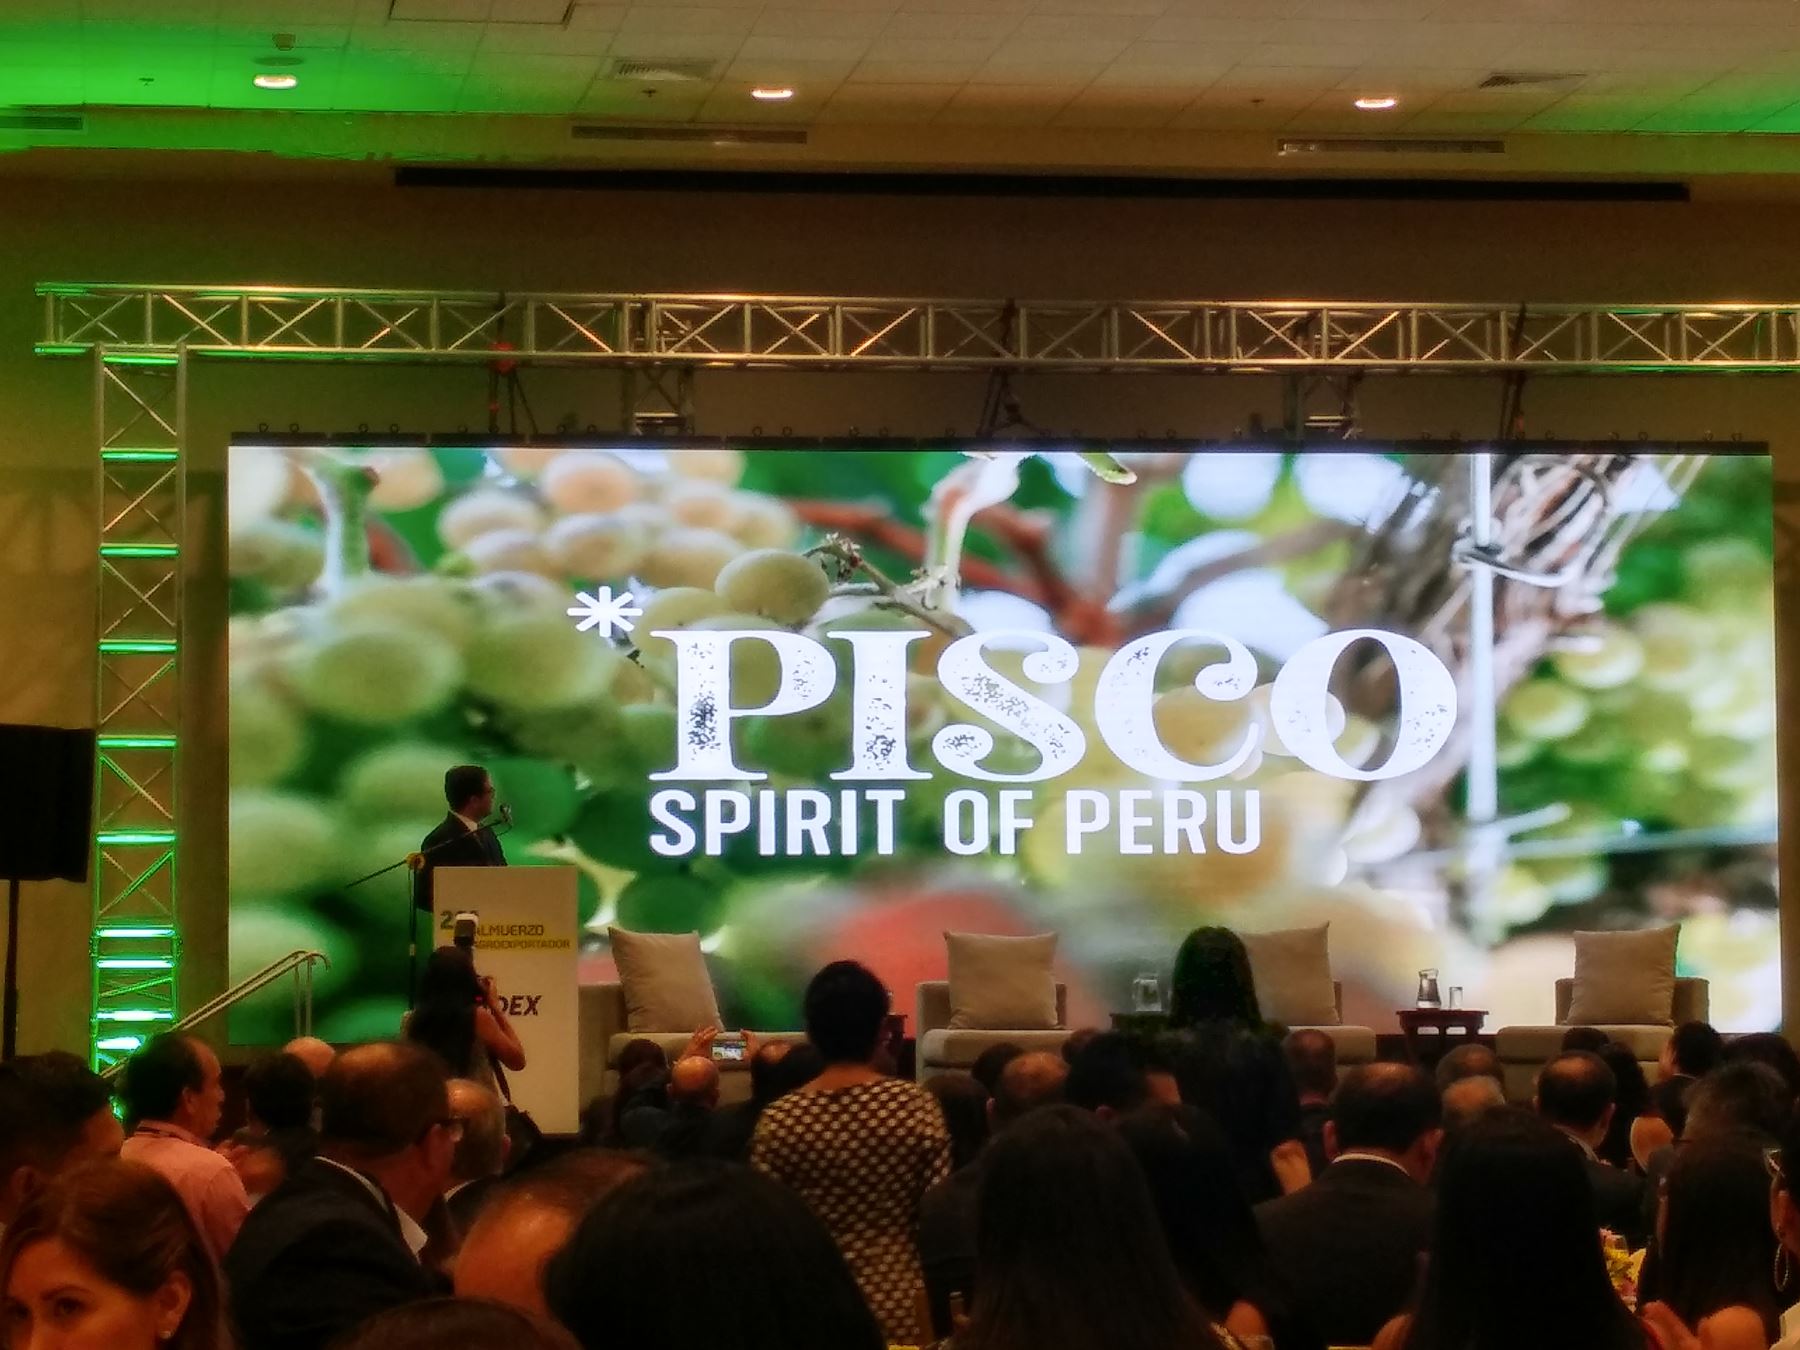 Ministro Edgar Vásquez presenta la marca "Pisco, Spurit of Peru". Foto: Andina